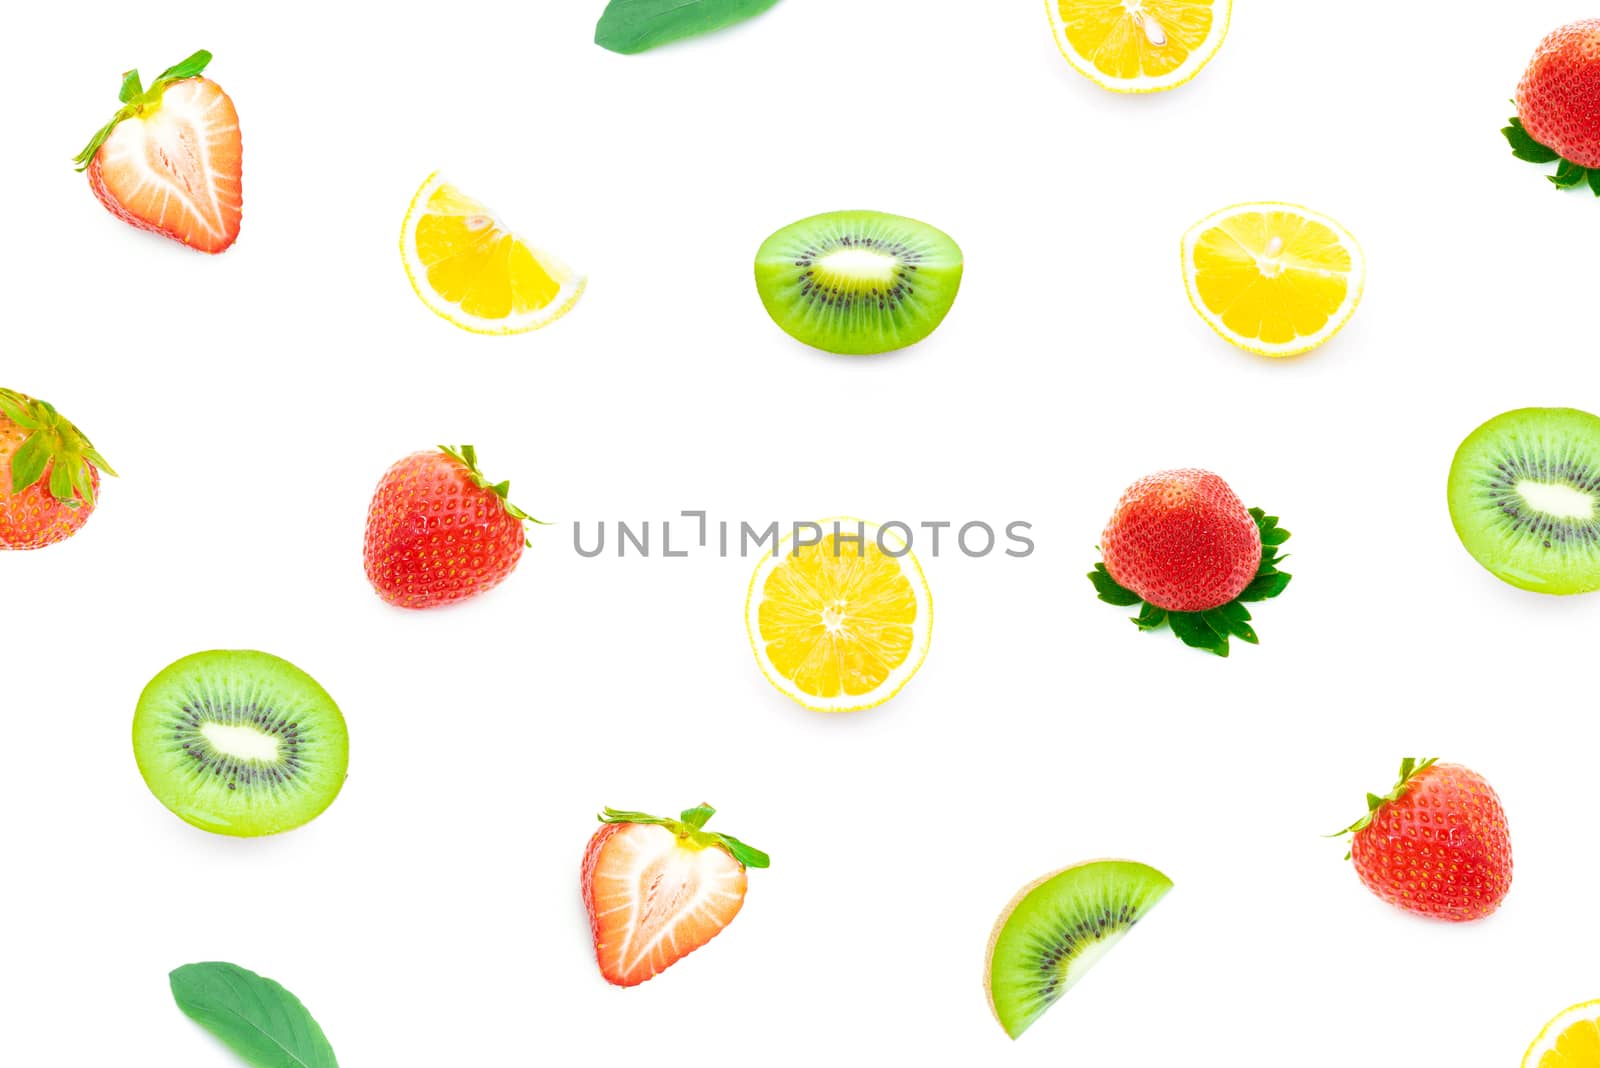 Refreshing Strawberry kiwi and lemon on a white background by sompongtom